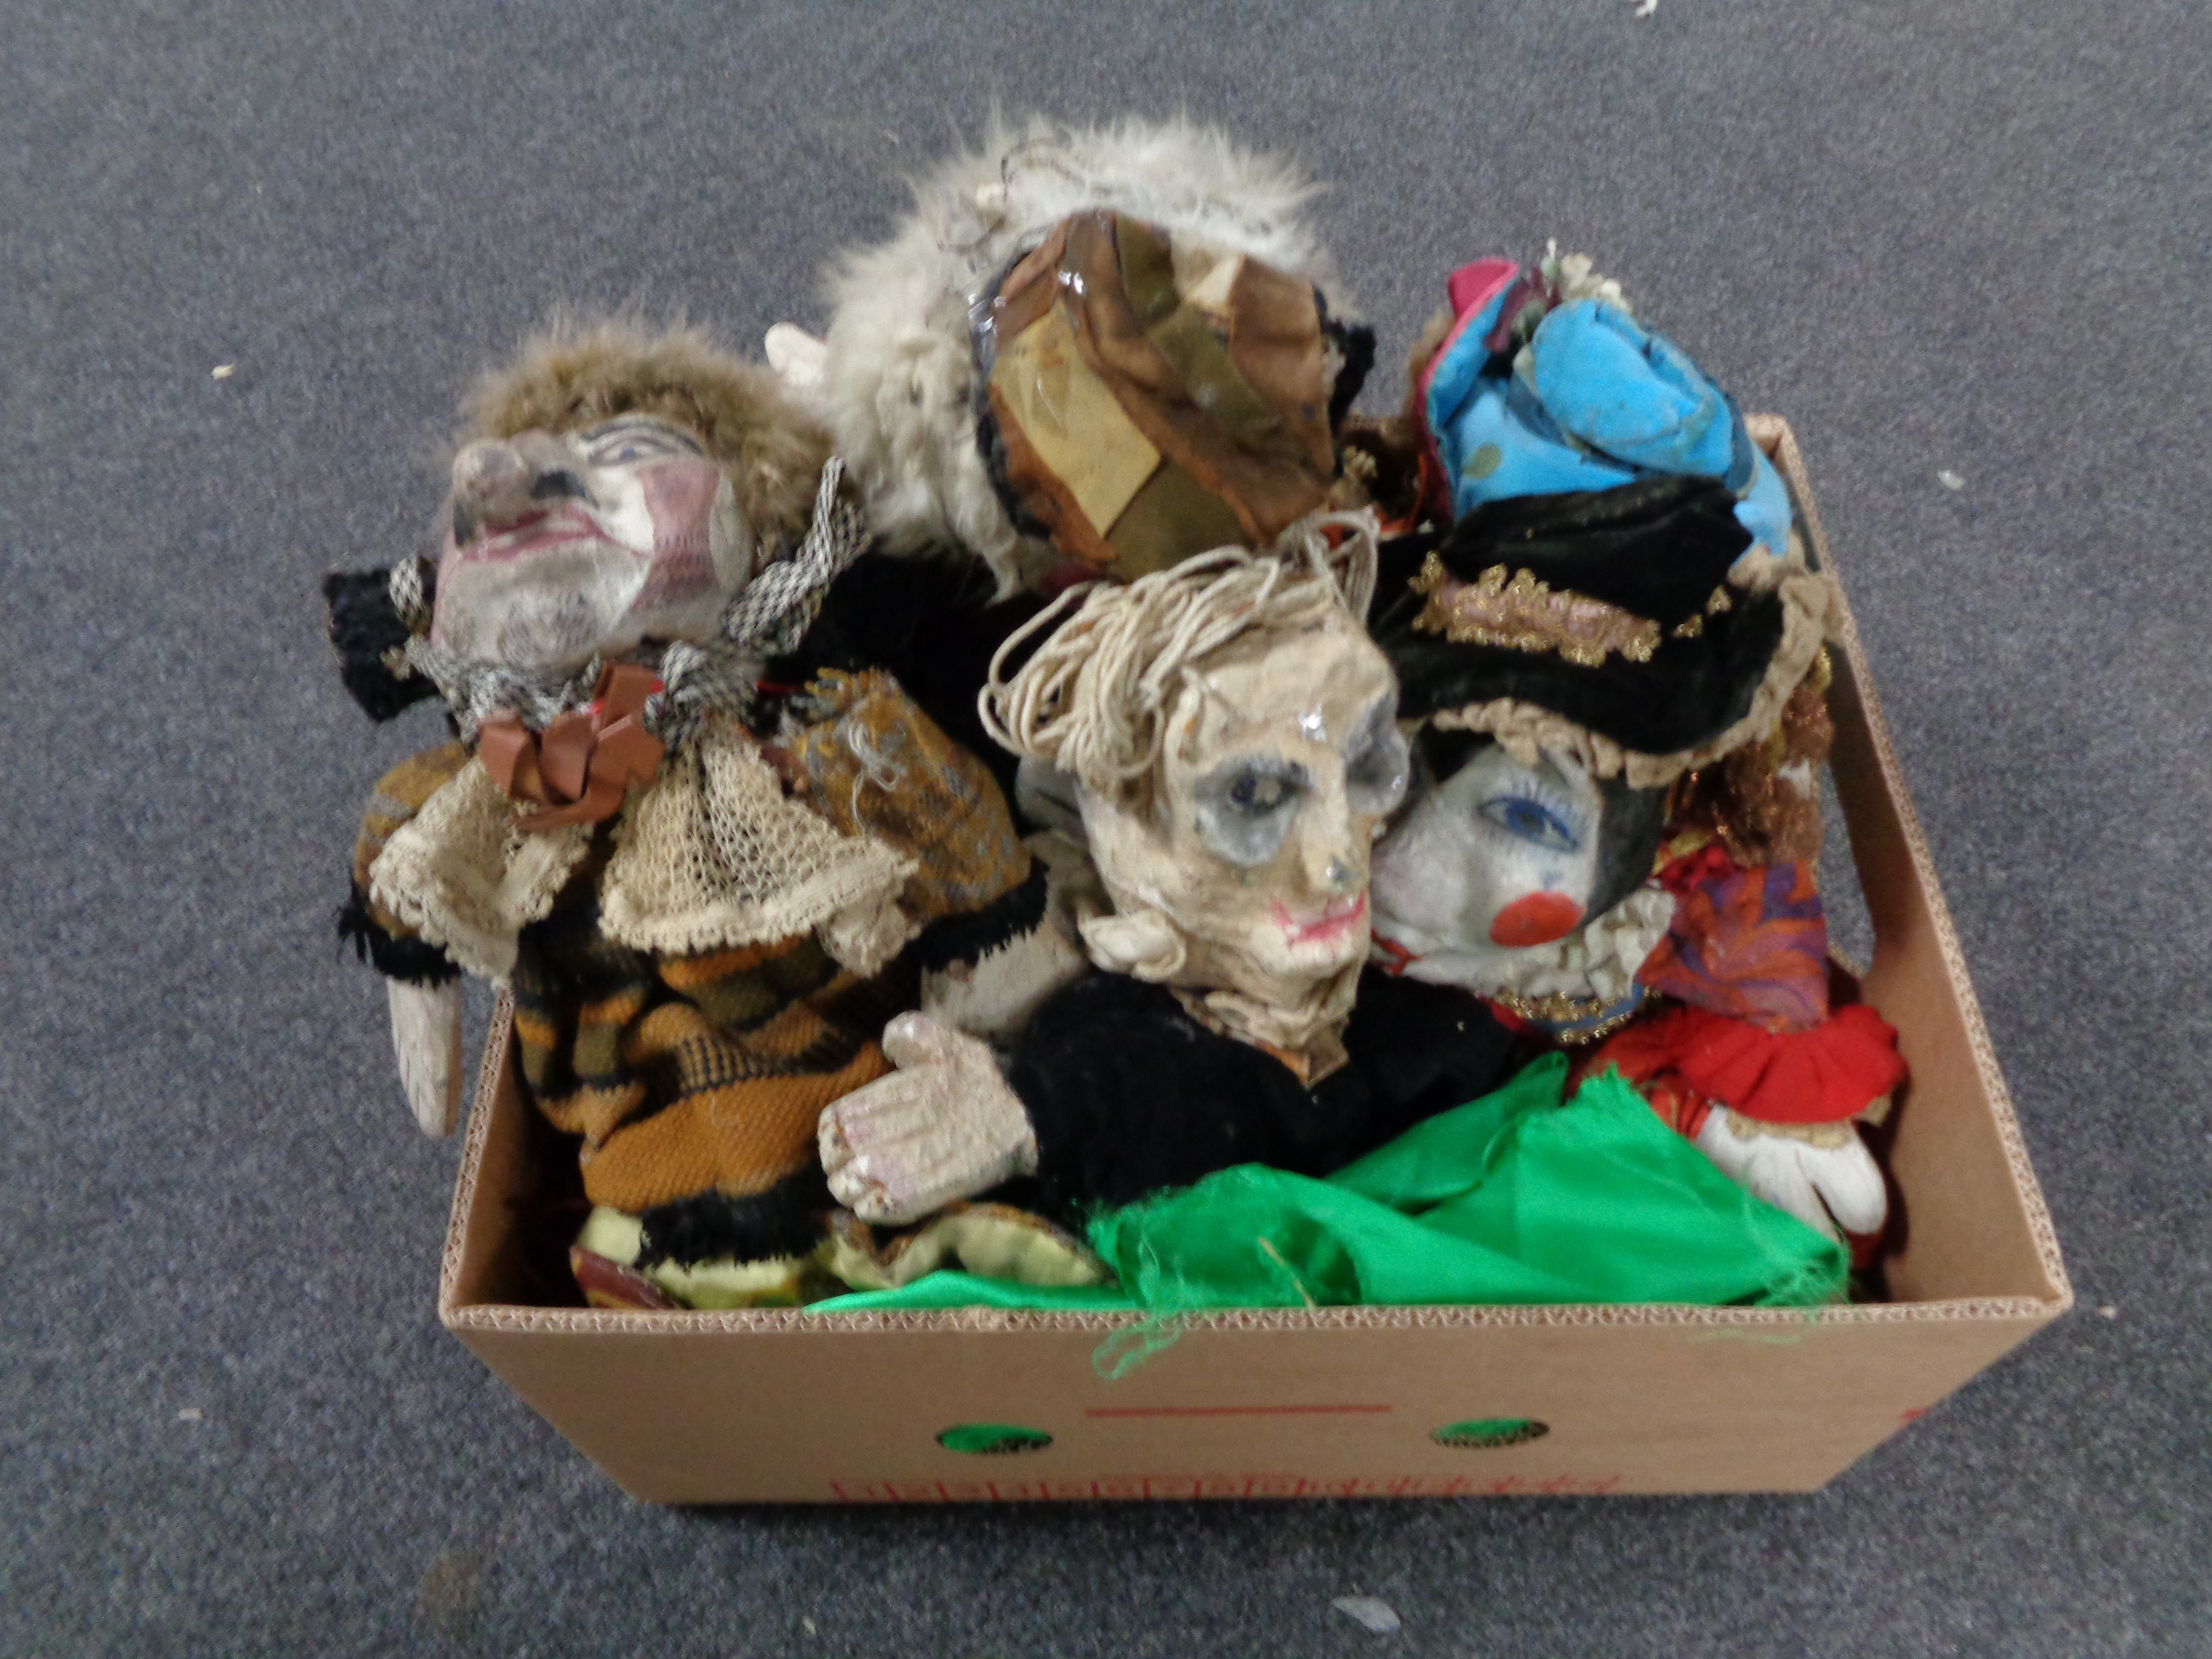 A box containing six papier mache theatre hand puppets